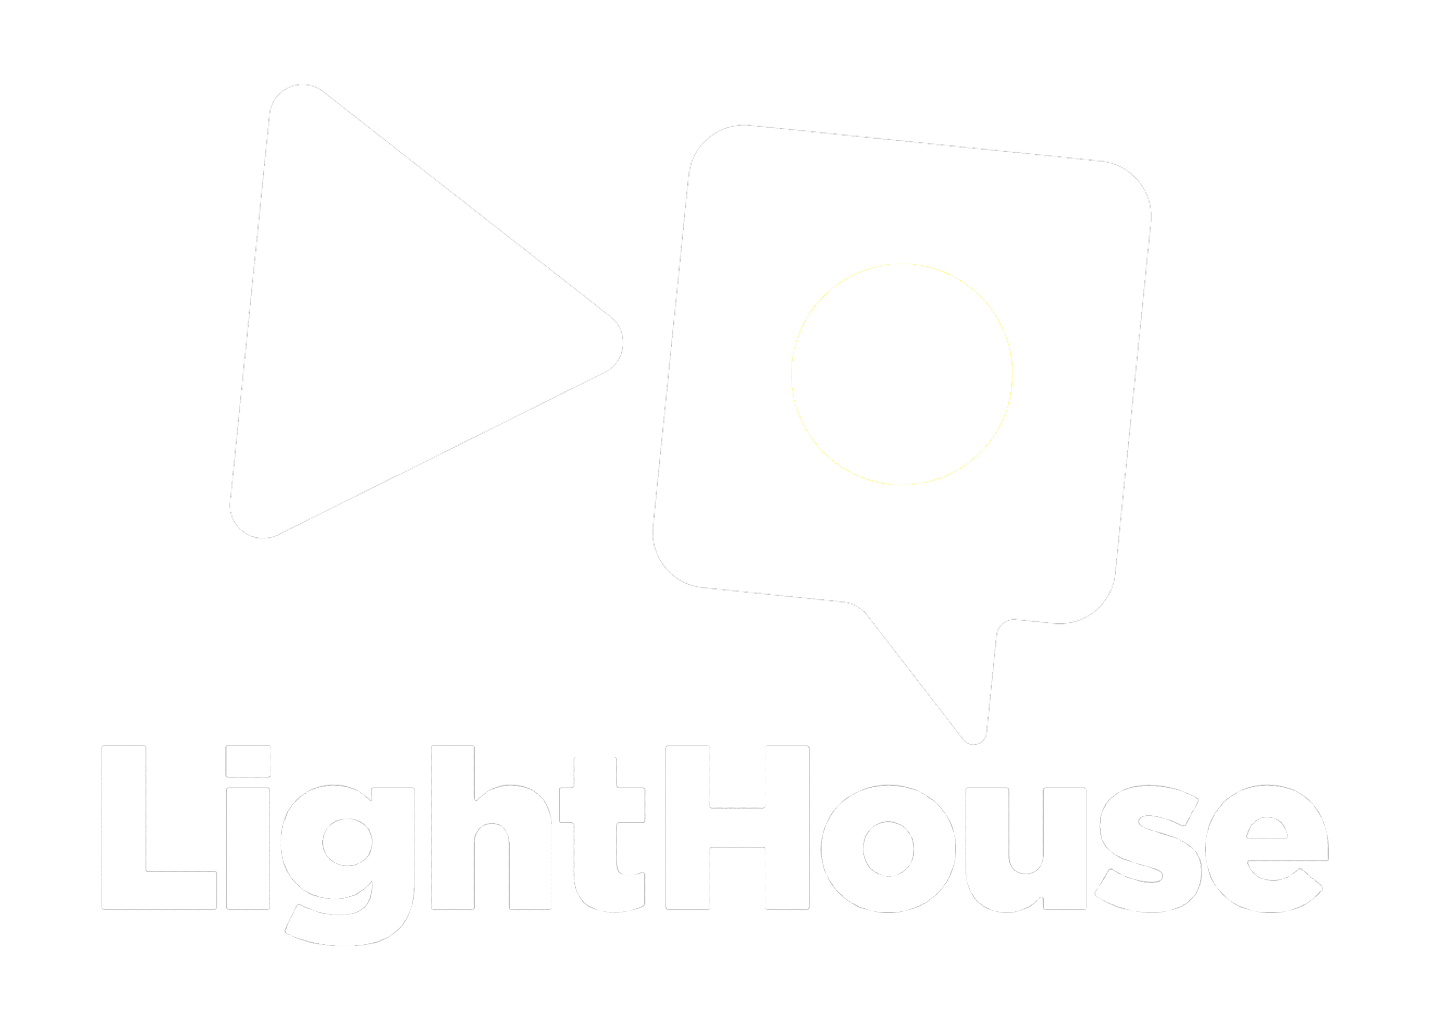 Lighthouse Studios Bali